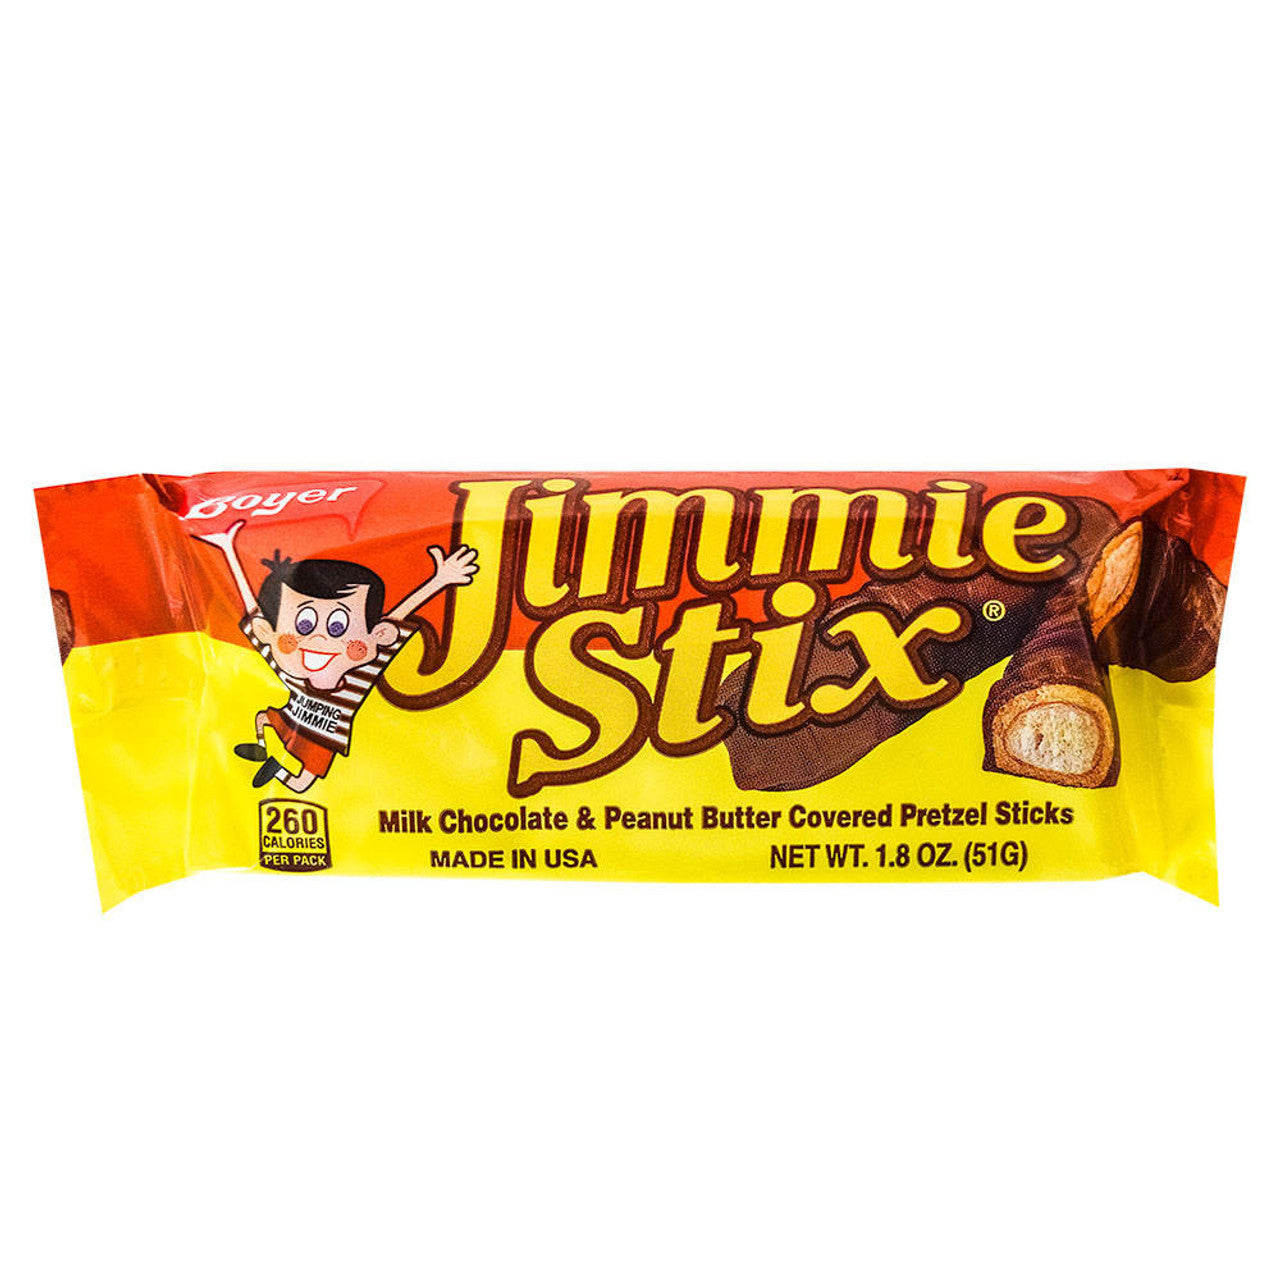 Jimmie Stix, Milk Chocolate & Peanut Butter Covered Pretzel Sticks